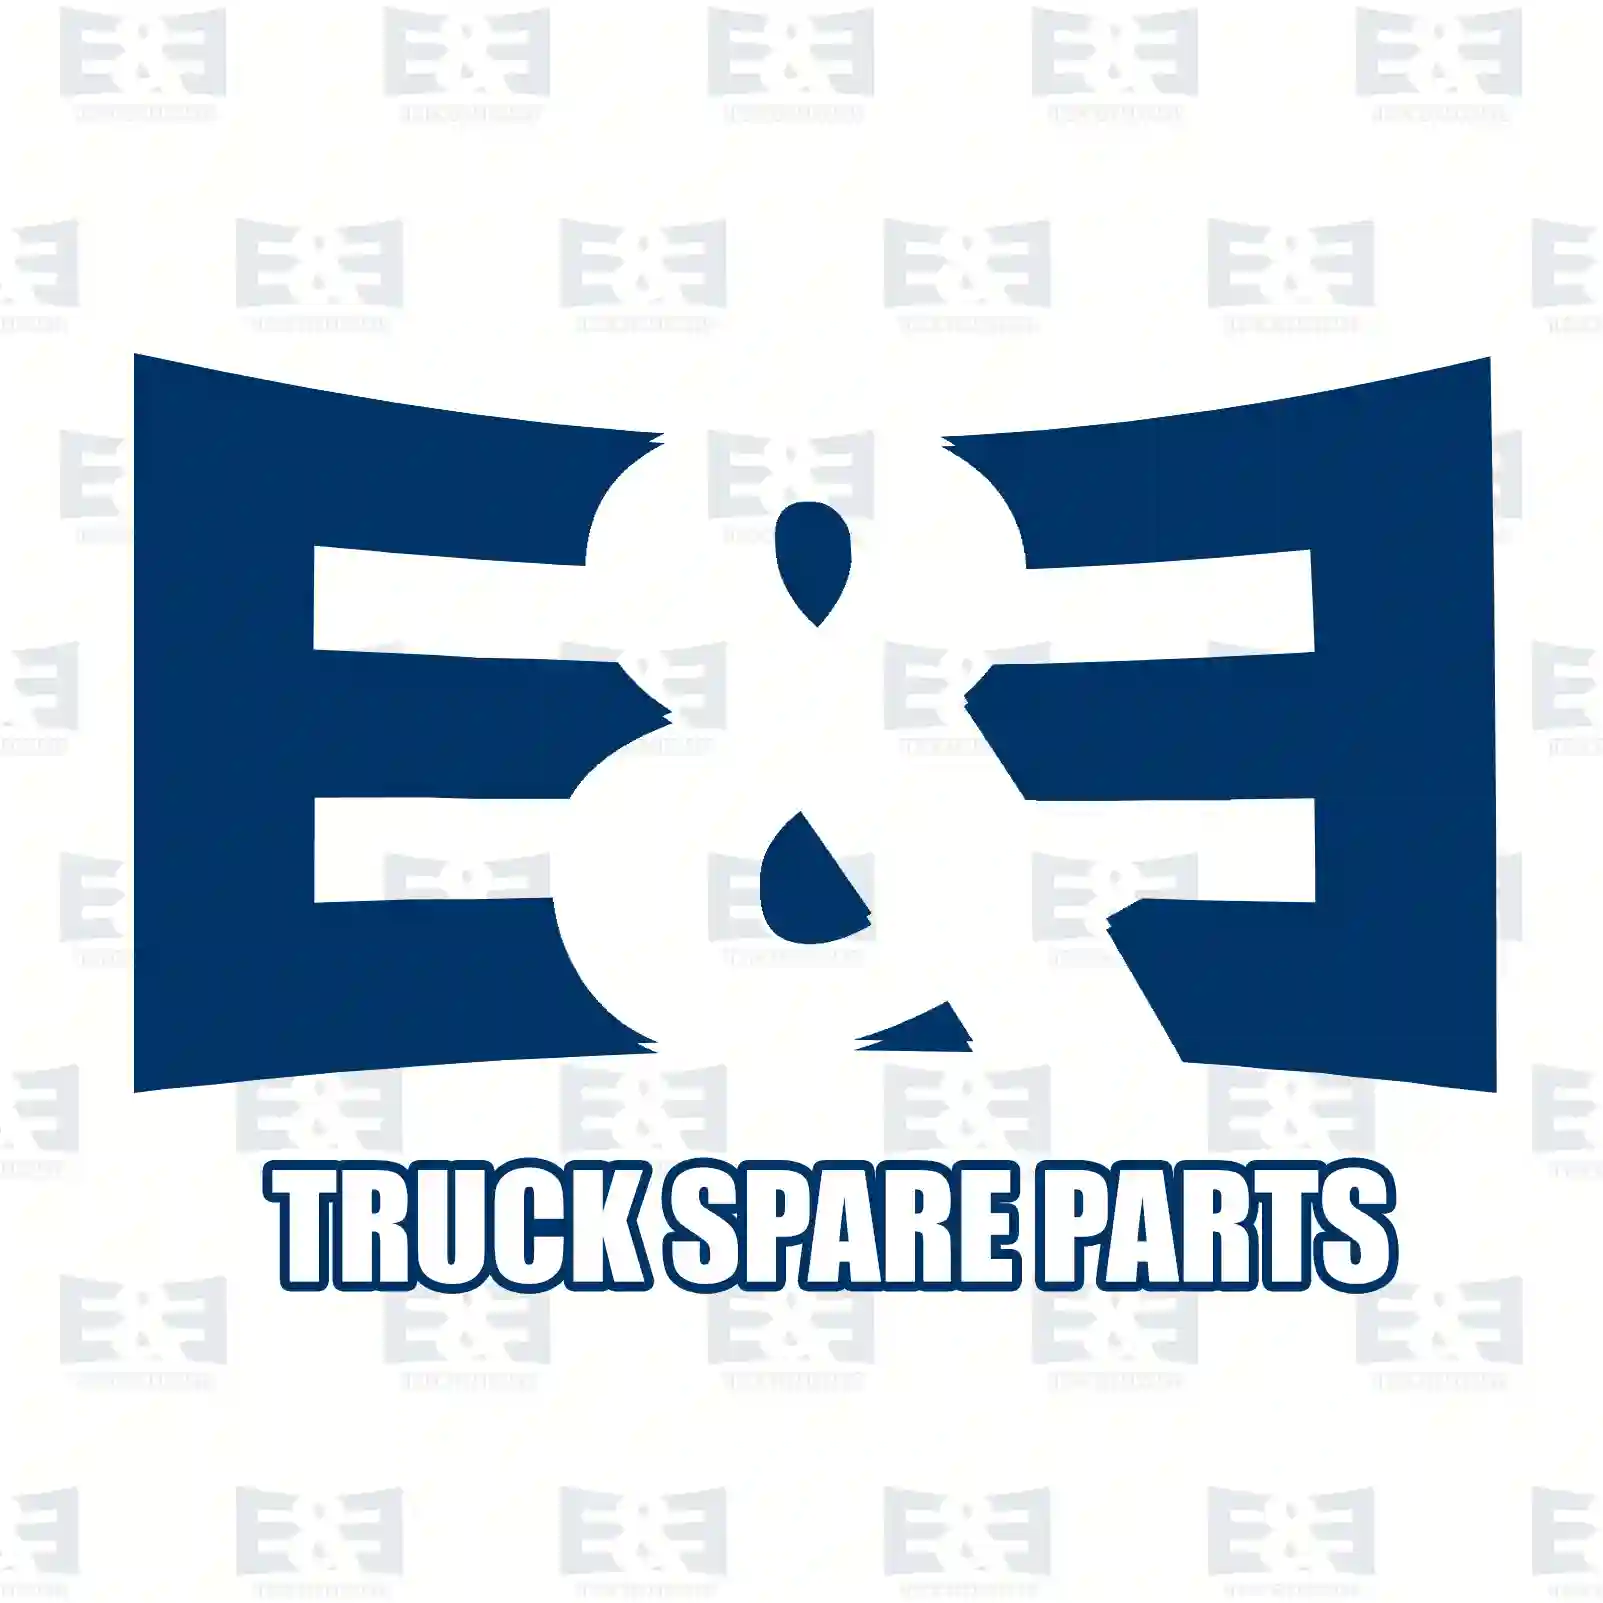 Belt tensioner, complete, with multiribbed belt, 2E2203461, 51958007437S3, , ||  2E2203461 E&E Truck Spare Parts | Truck Spare Parts, Auotomotive Spare Parts Belt tensioner, complete, with multiribbed belt, 2E2203461, 51958007437S3, , ||  2E2203461 E&E Truck Spare Parts | Truck Spare Parts, Auotomotive Spare Parts